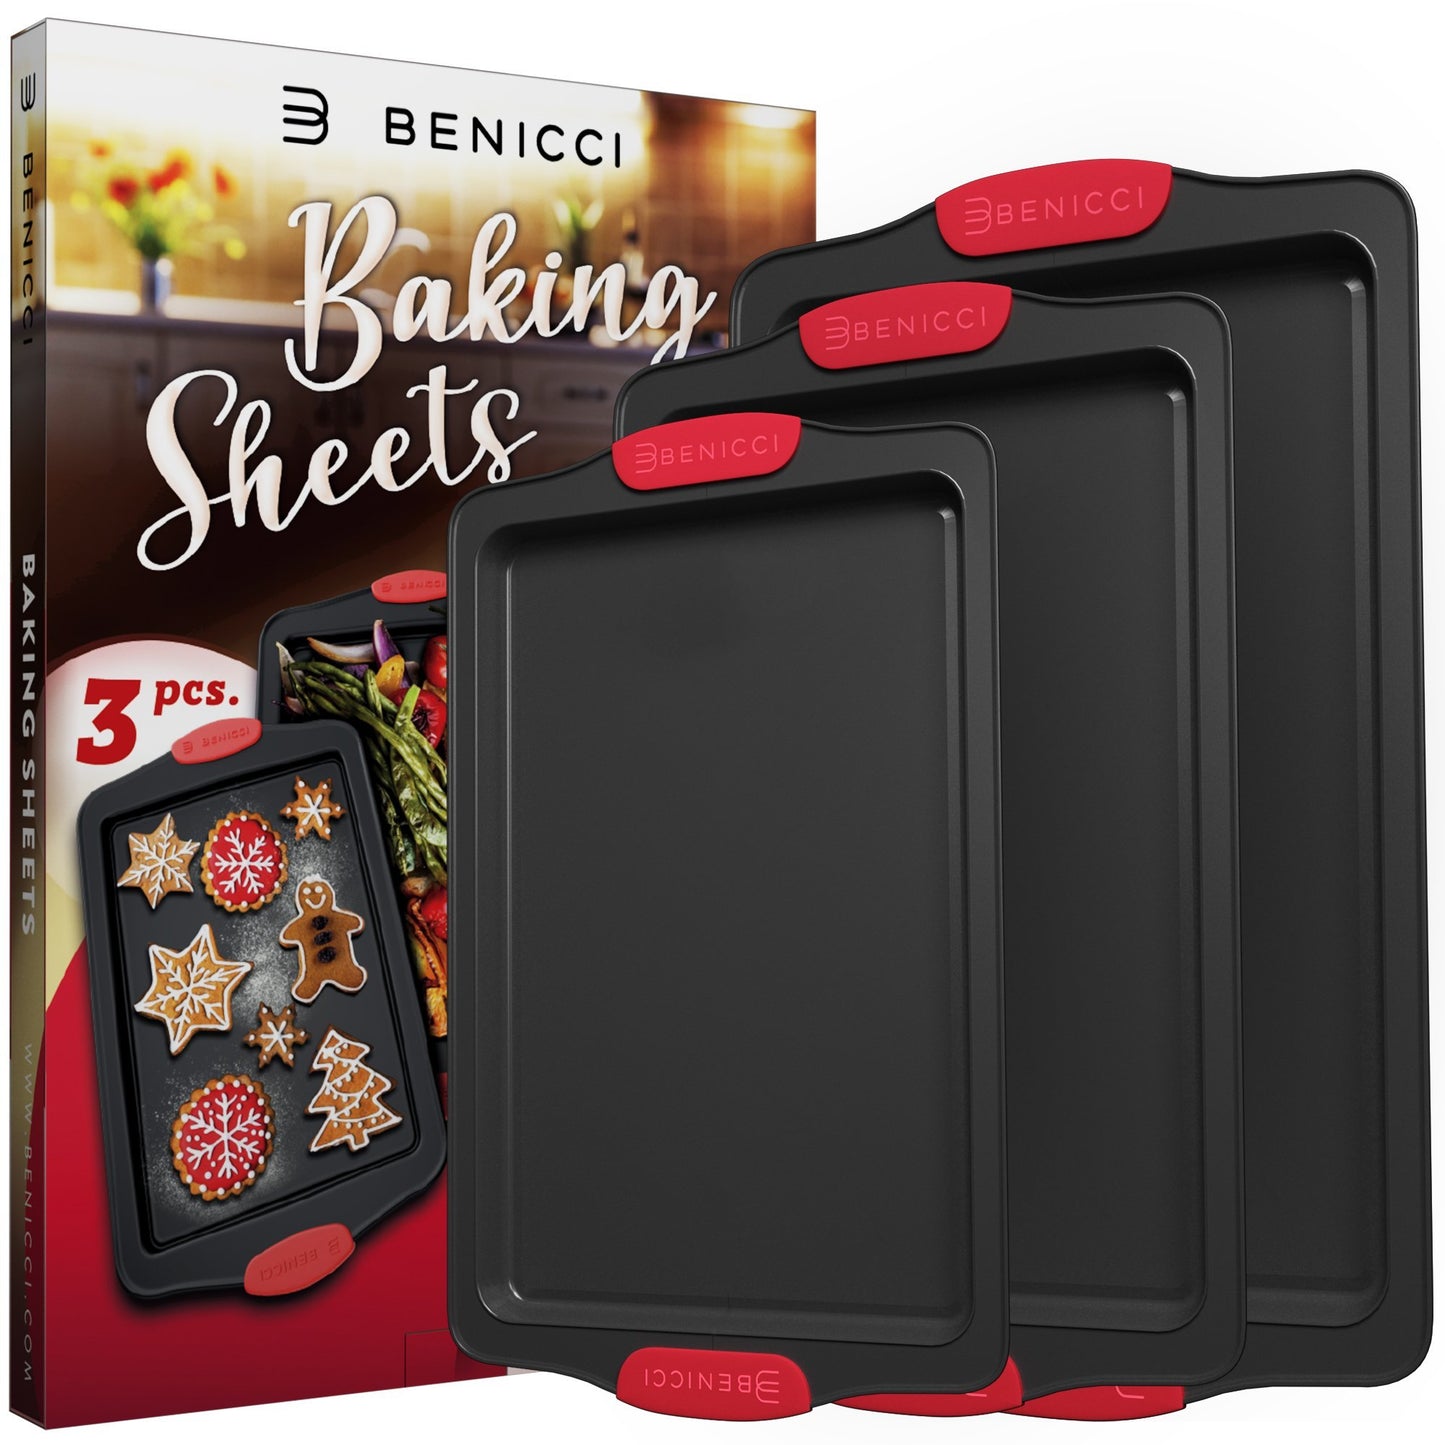 Premium Non-Stick Baking Sheets Set of 3 - Deluxe PBA Free, Easy